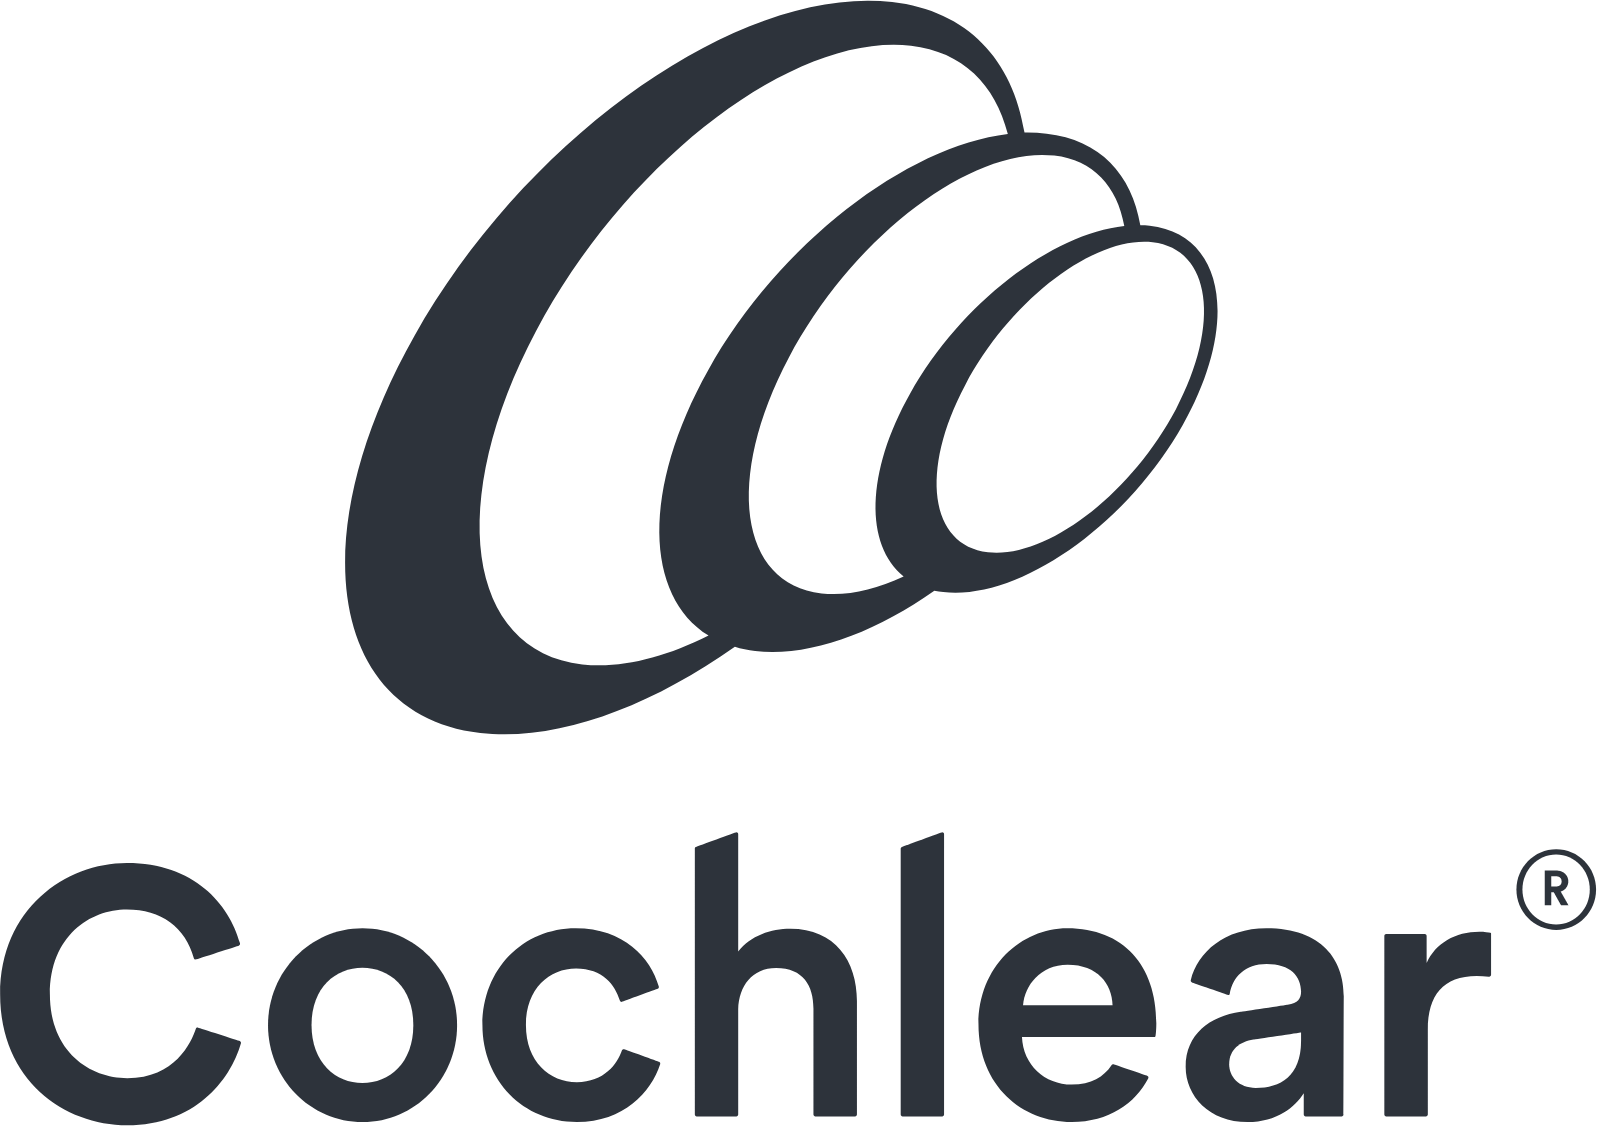 Cochlear logo large (transparent PNG)